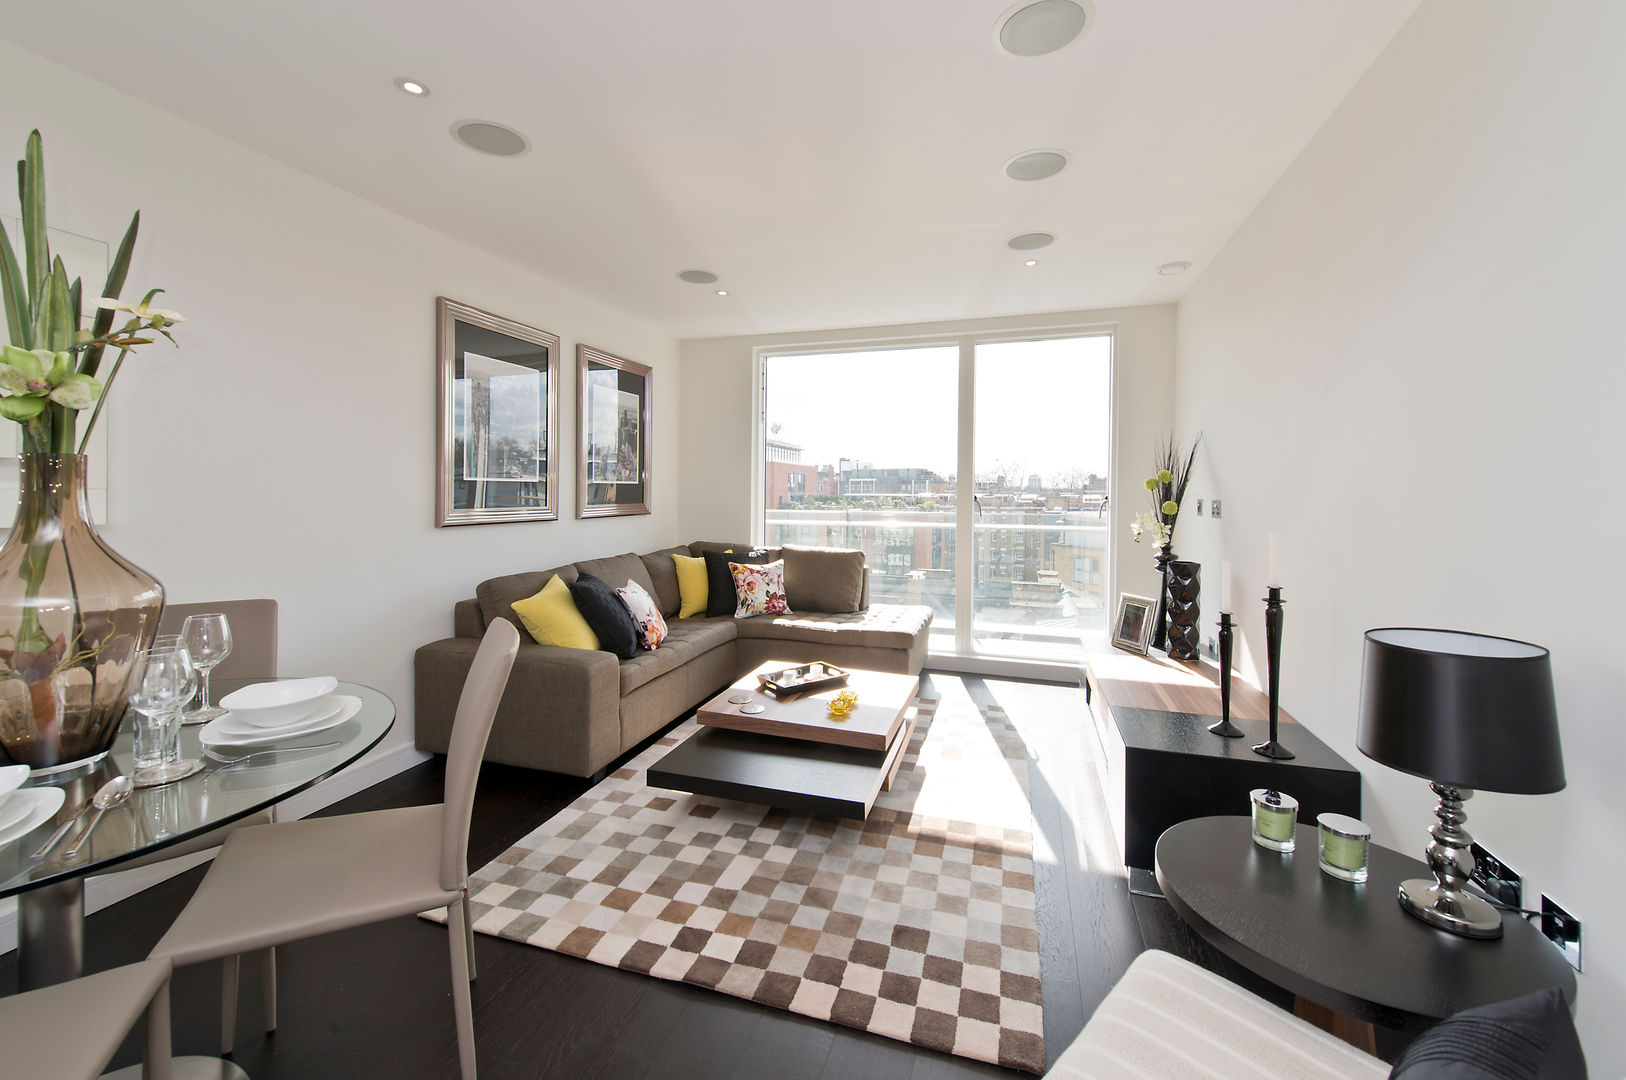 Lounge In:Style Direct Salas de estilo moderno